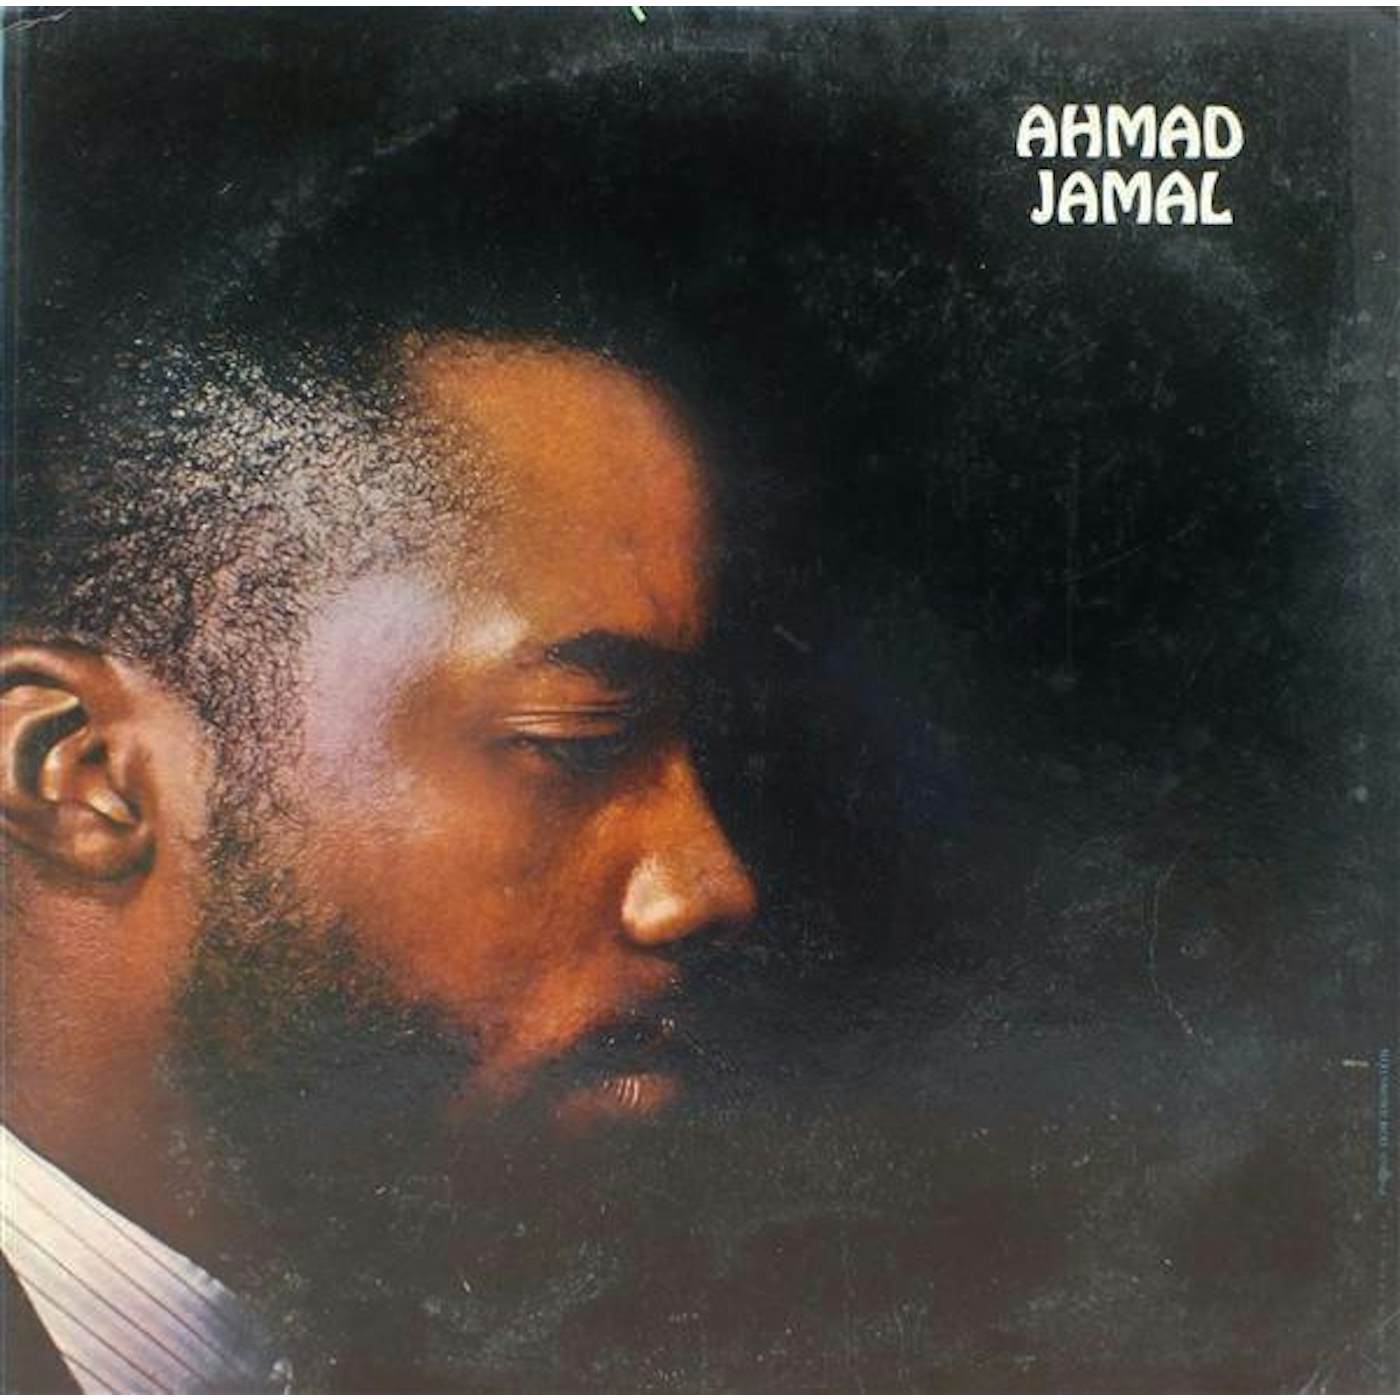 PIANO SCENE OF AHMAD JAMAL CD